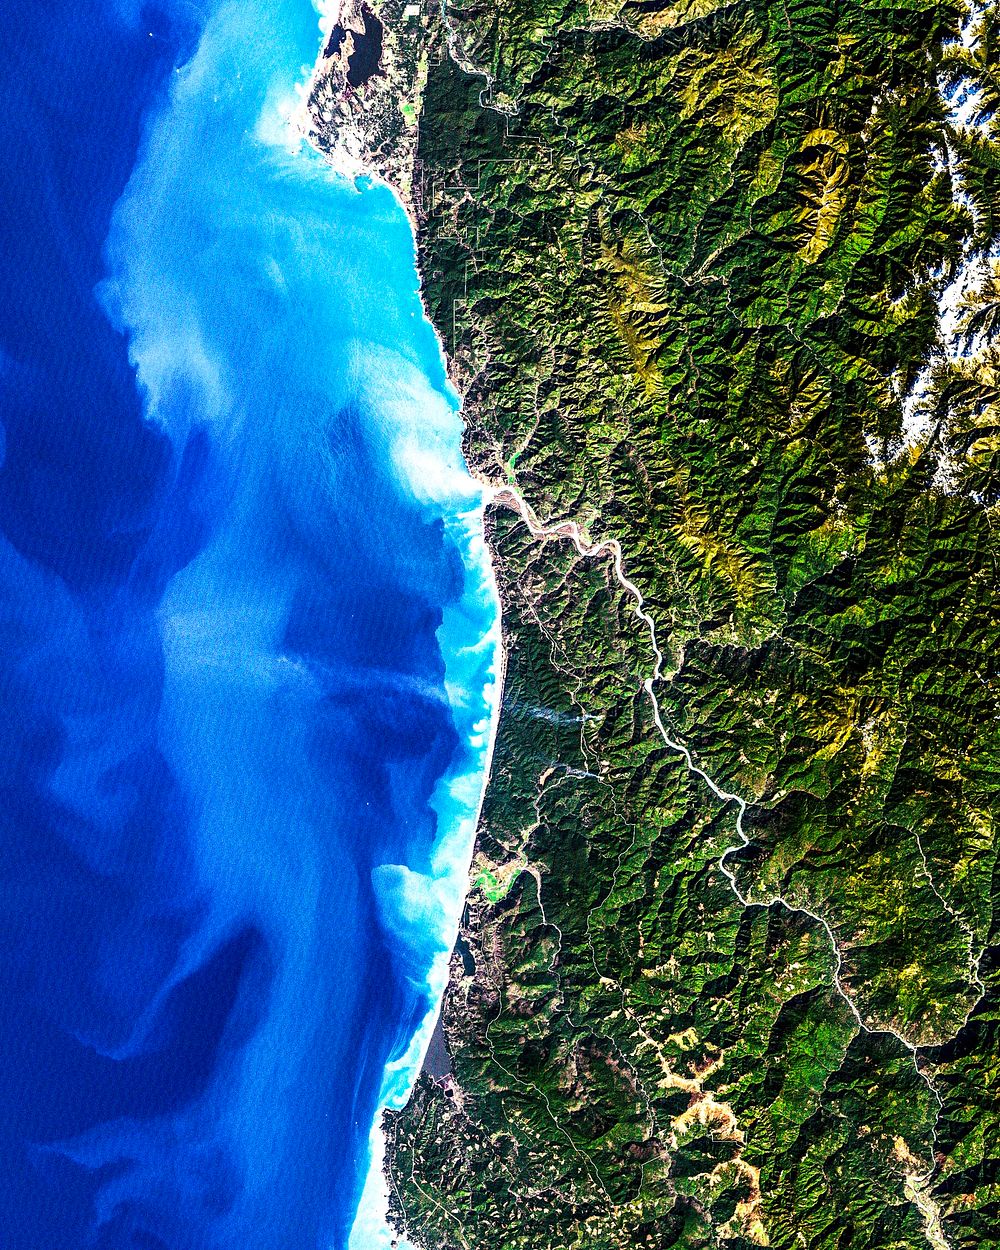 Redwood National Park. Original from NASA. Digitally enhanced by rawpixel.